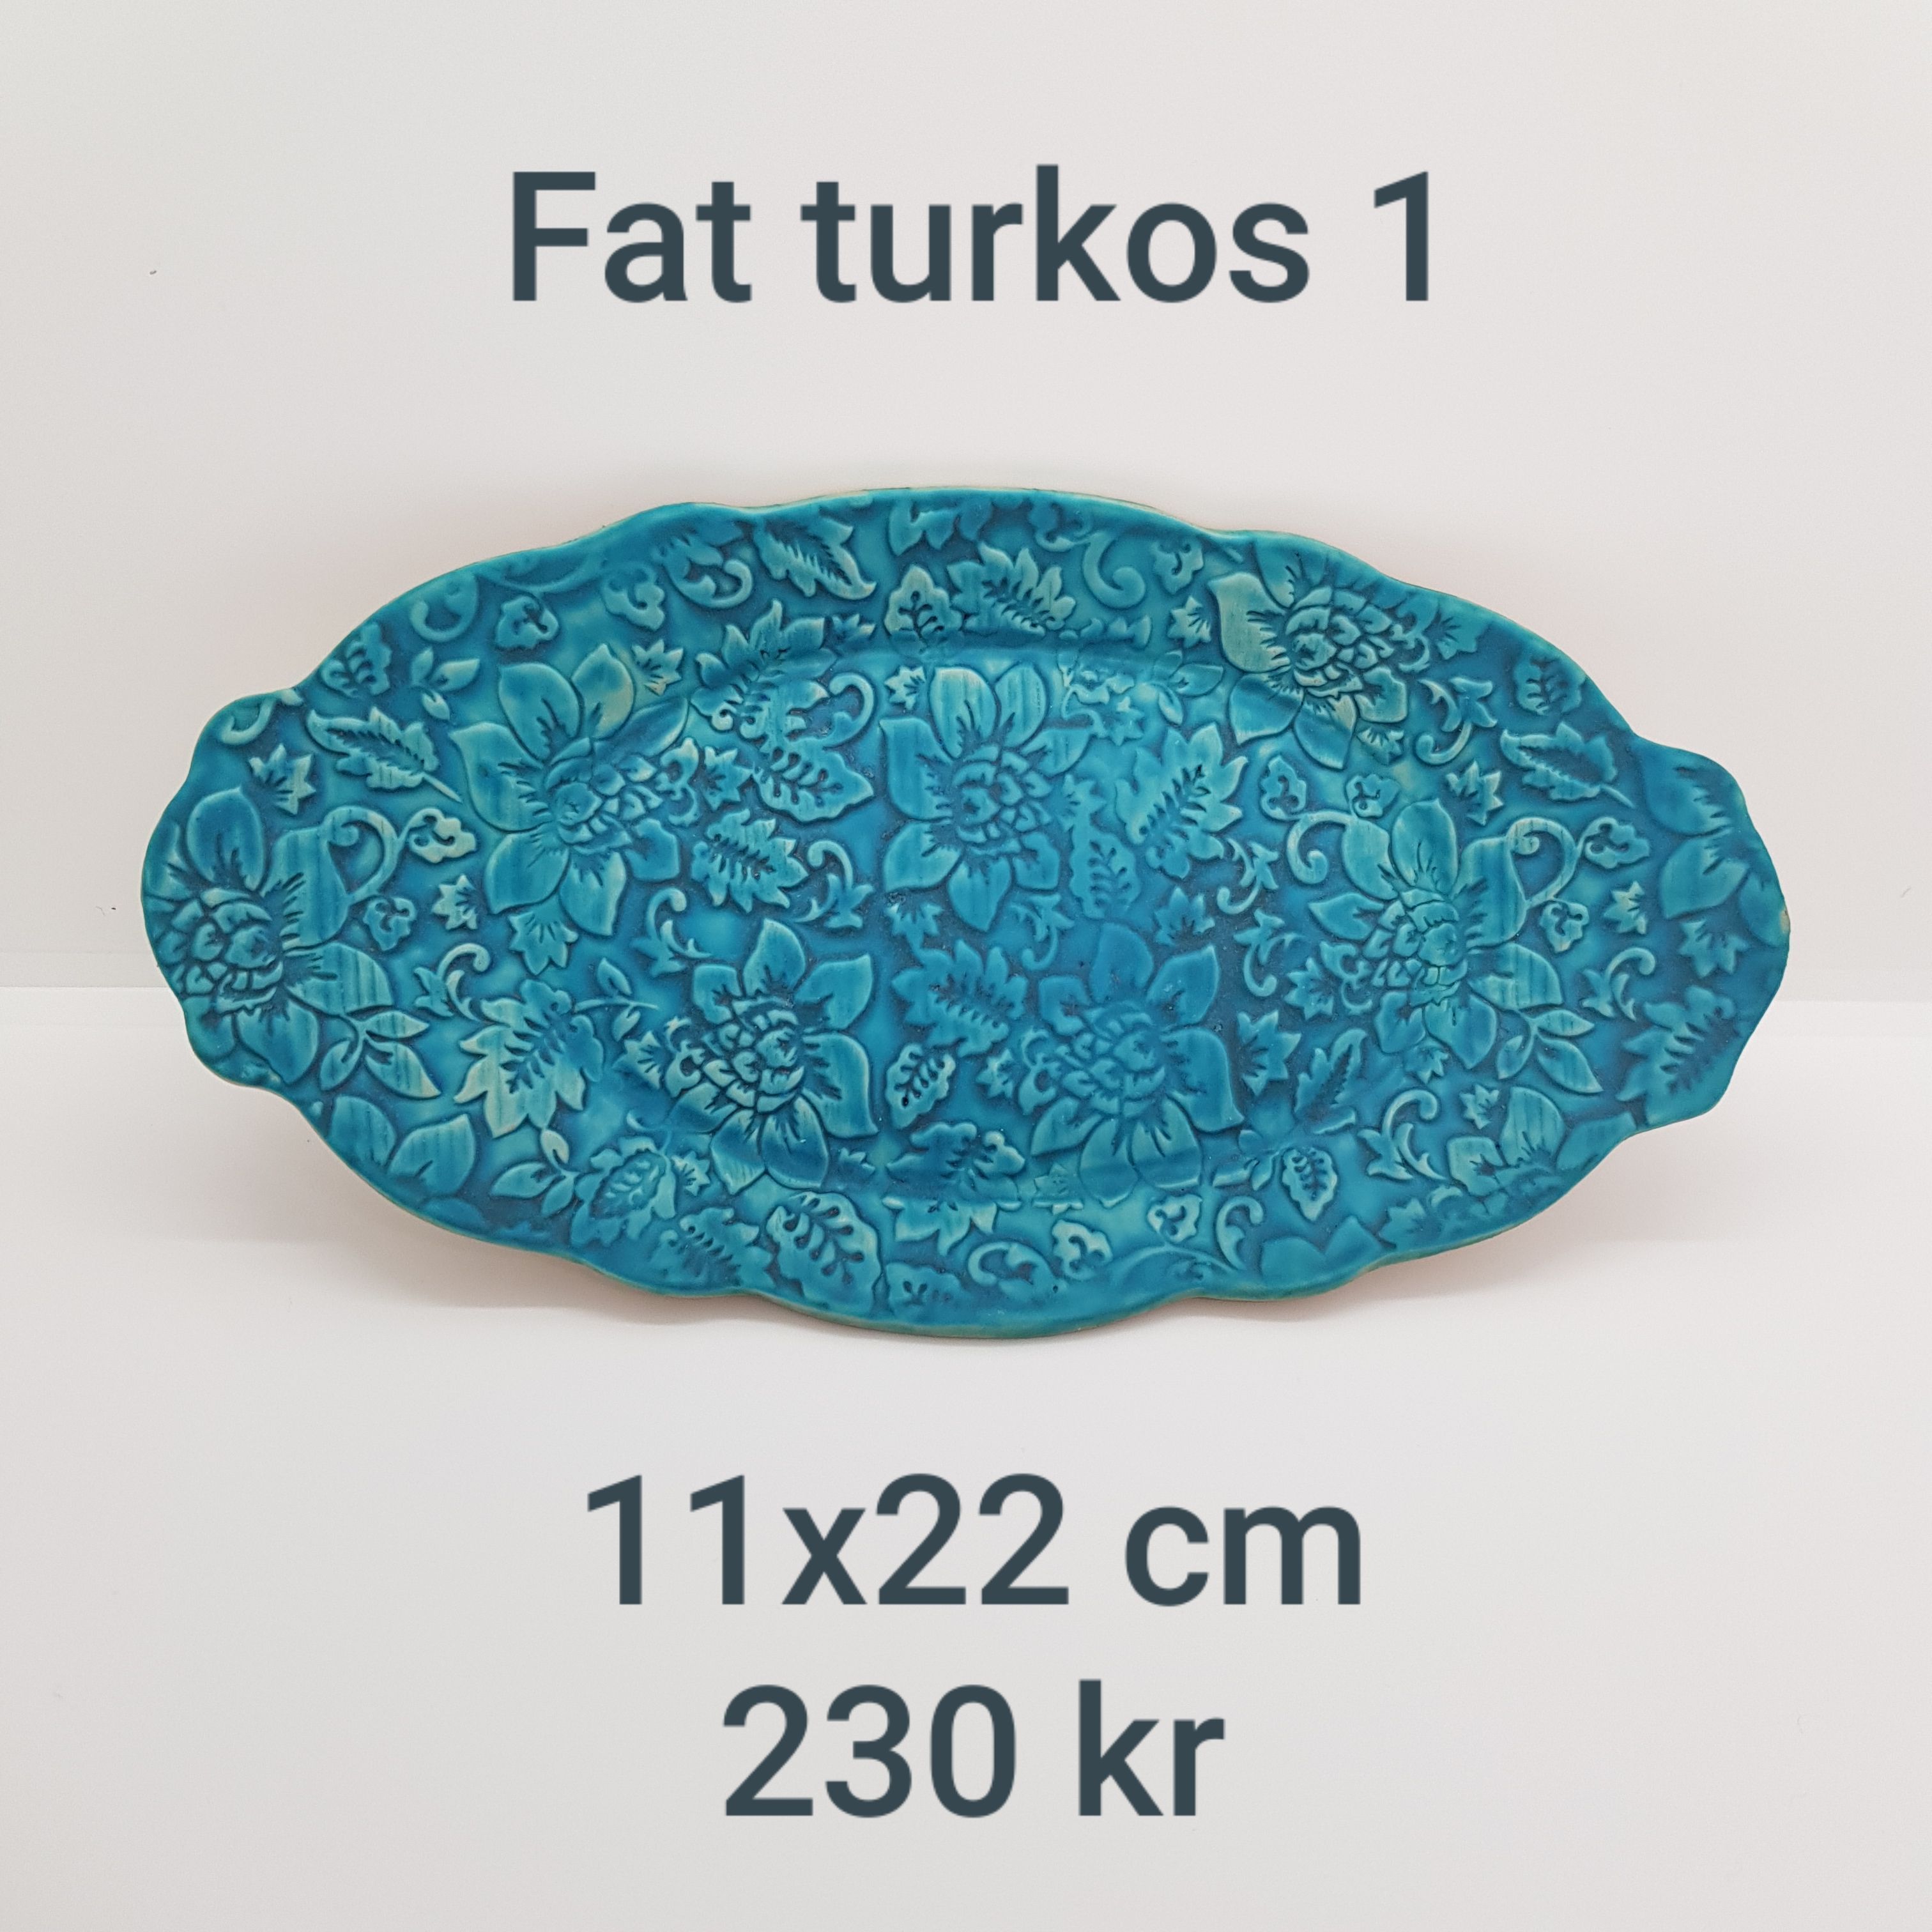 a fat turkos 1